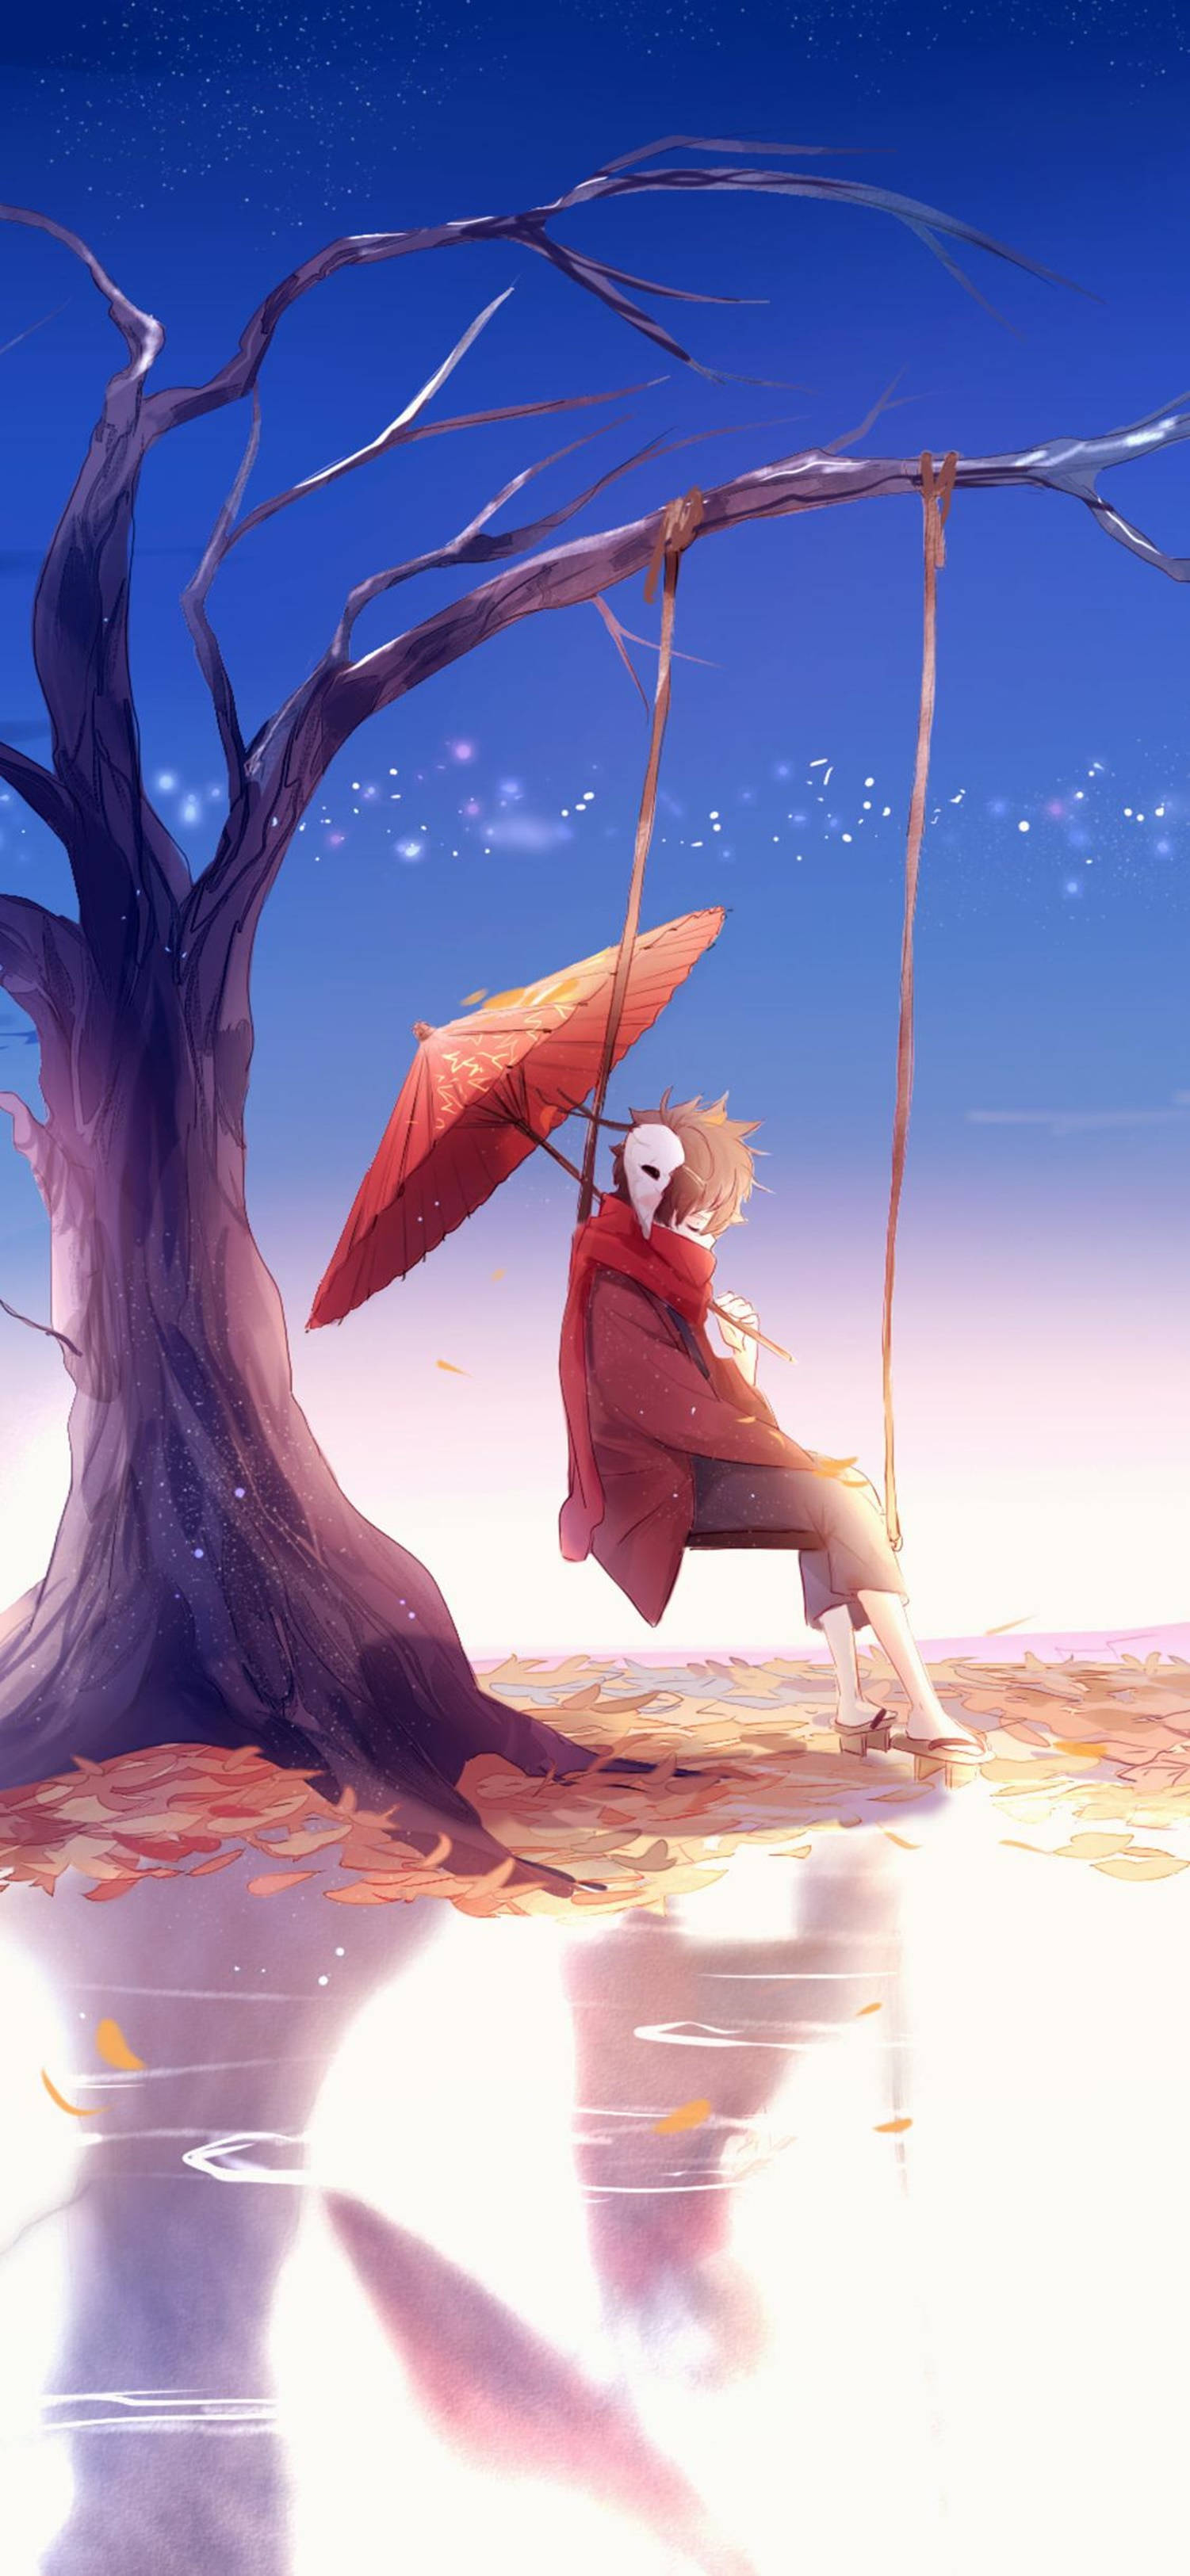 4k Anime Iphone Swing Boy With Umbrella Wallpaper